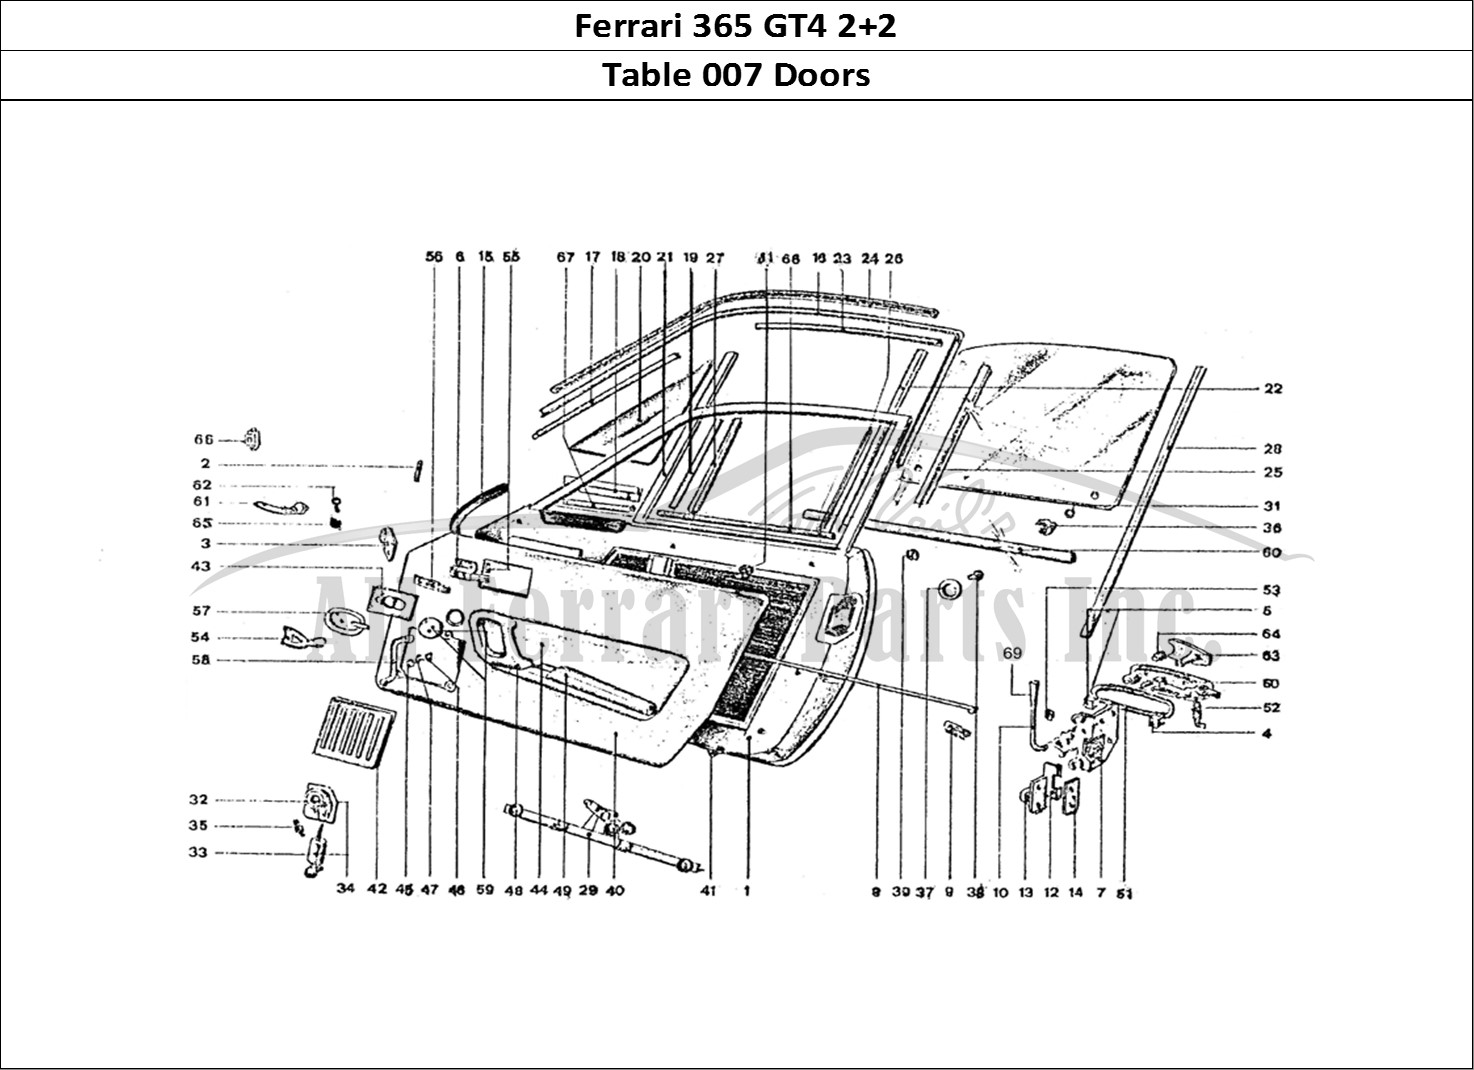 Ferrari Parts Ferrari 365 GT4 2+2 Coachwork Page 007 Doors & Inner fixings